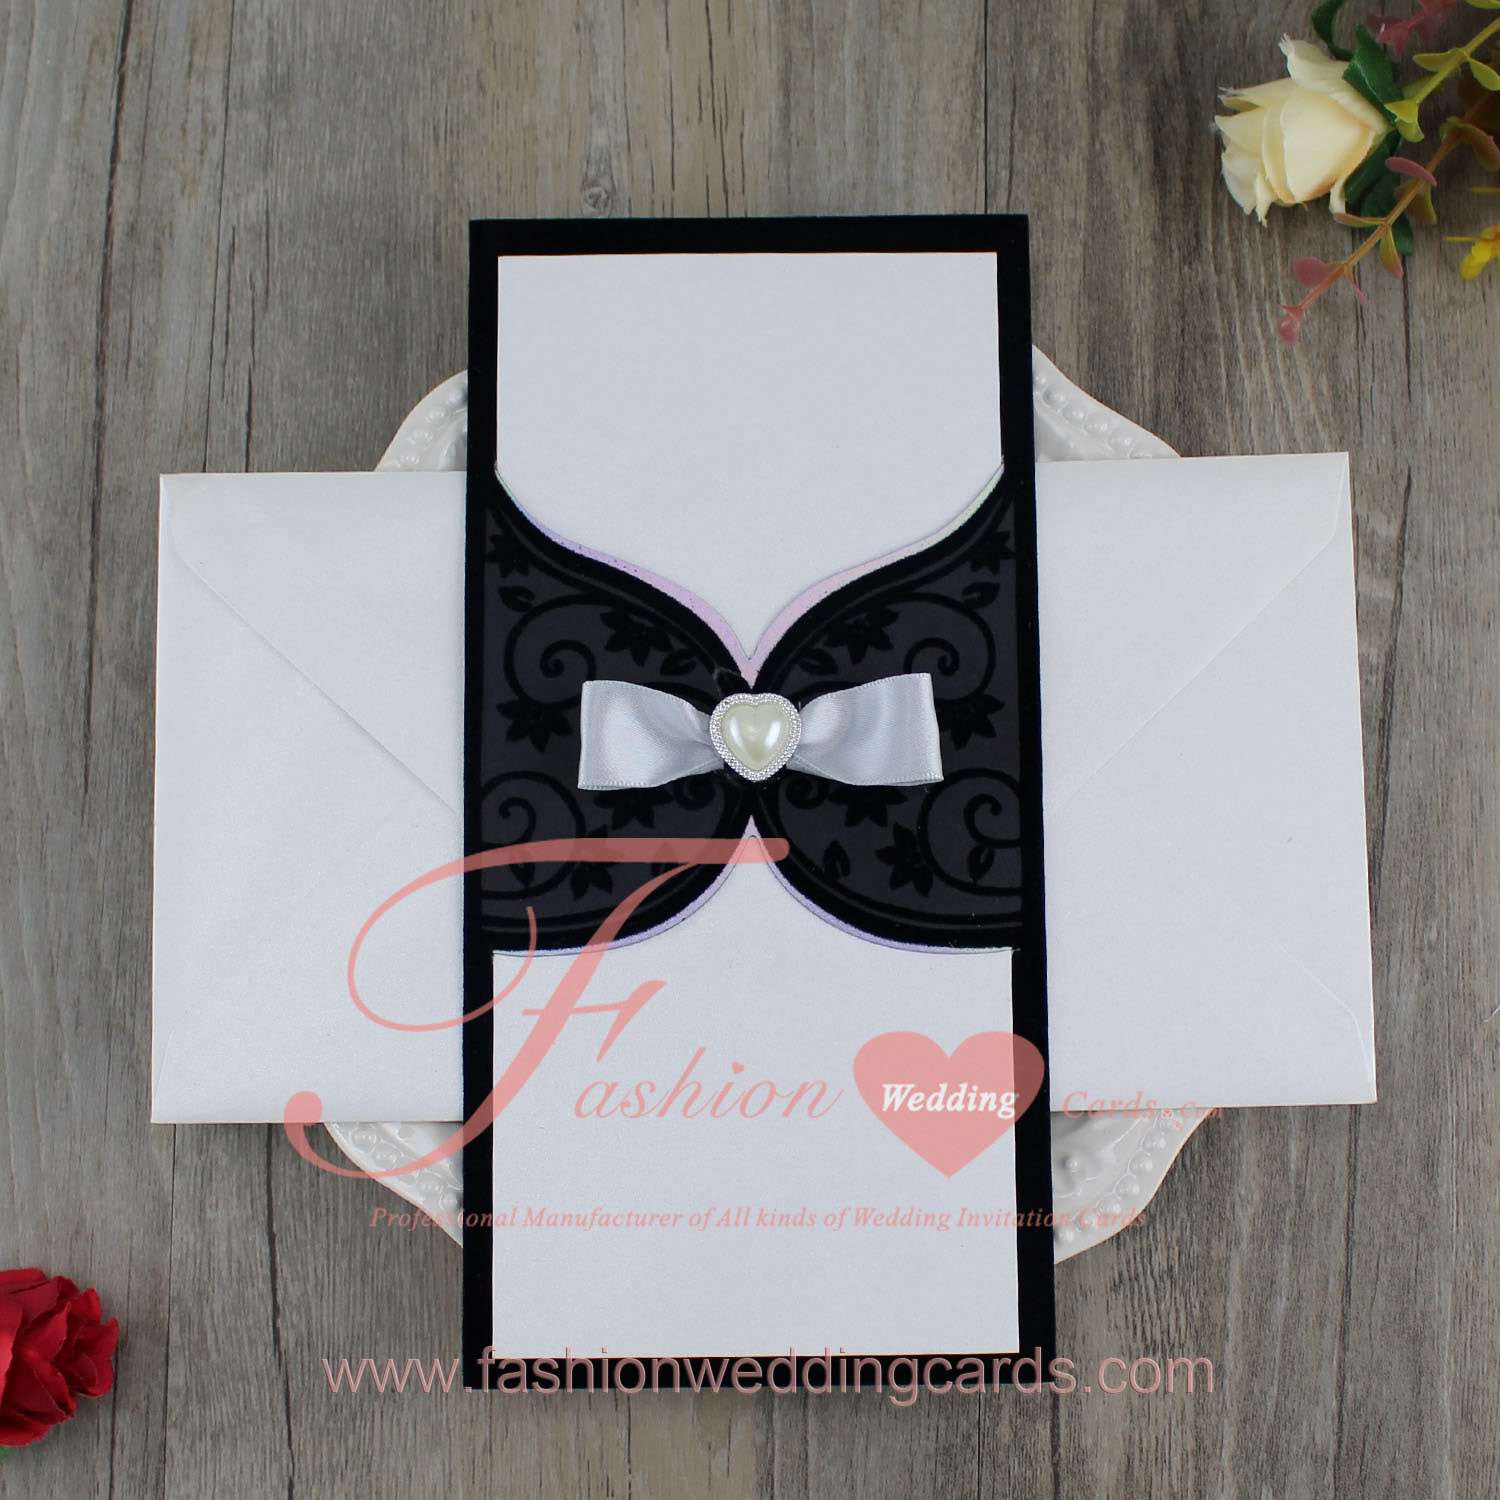 Handmade Flocked Wedding Invitation Cards Designs